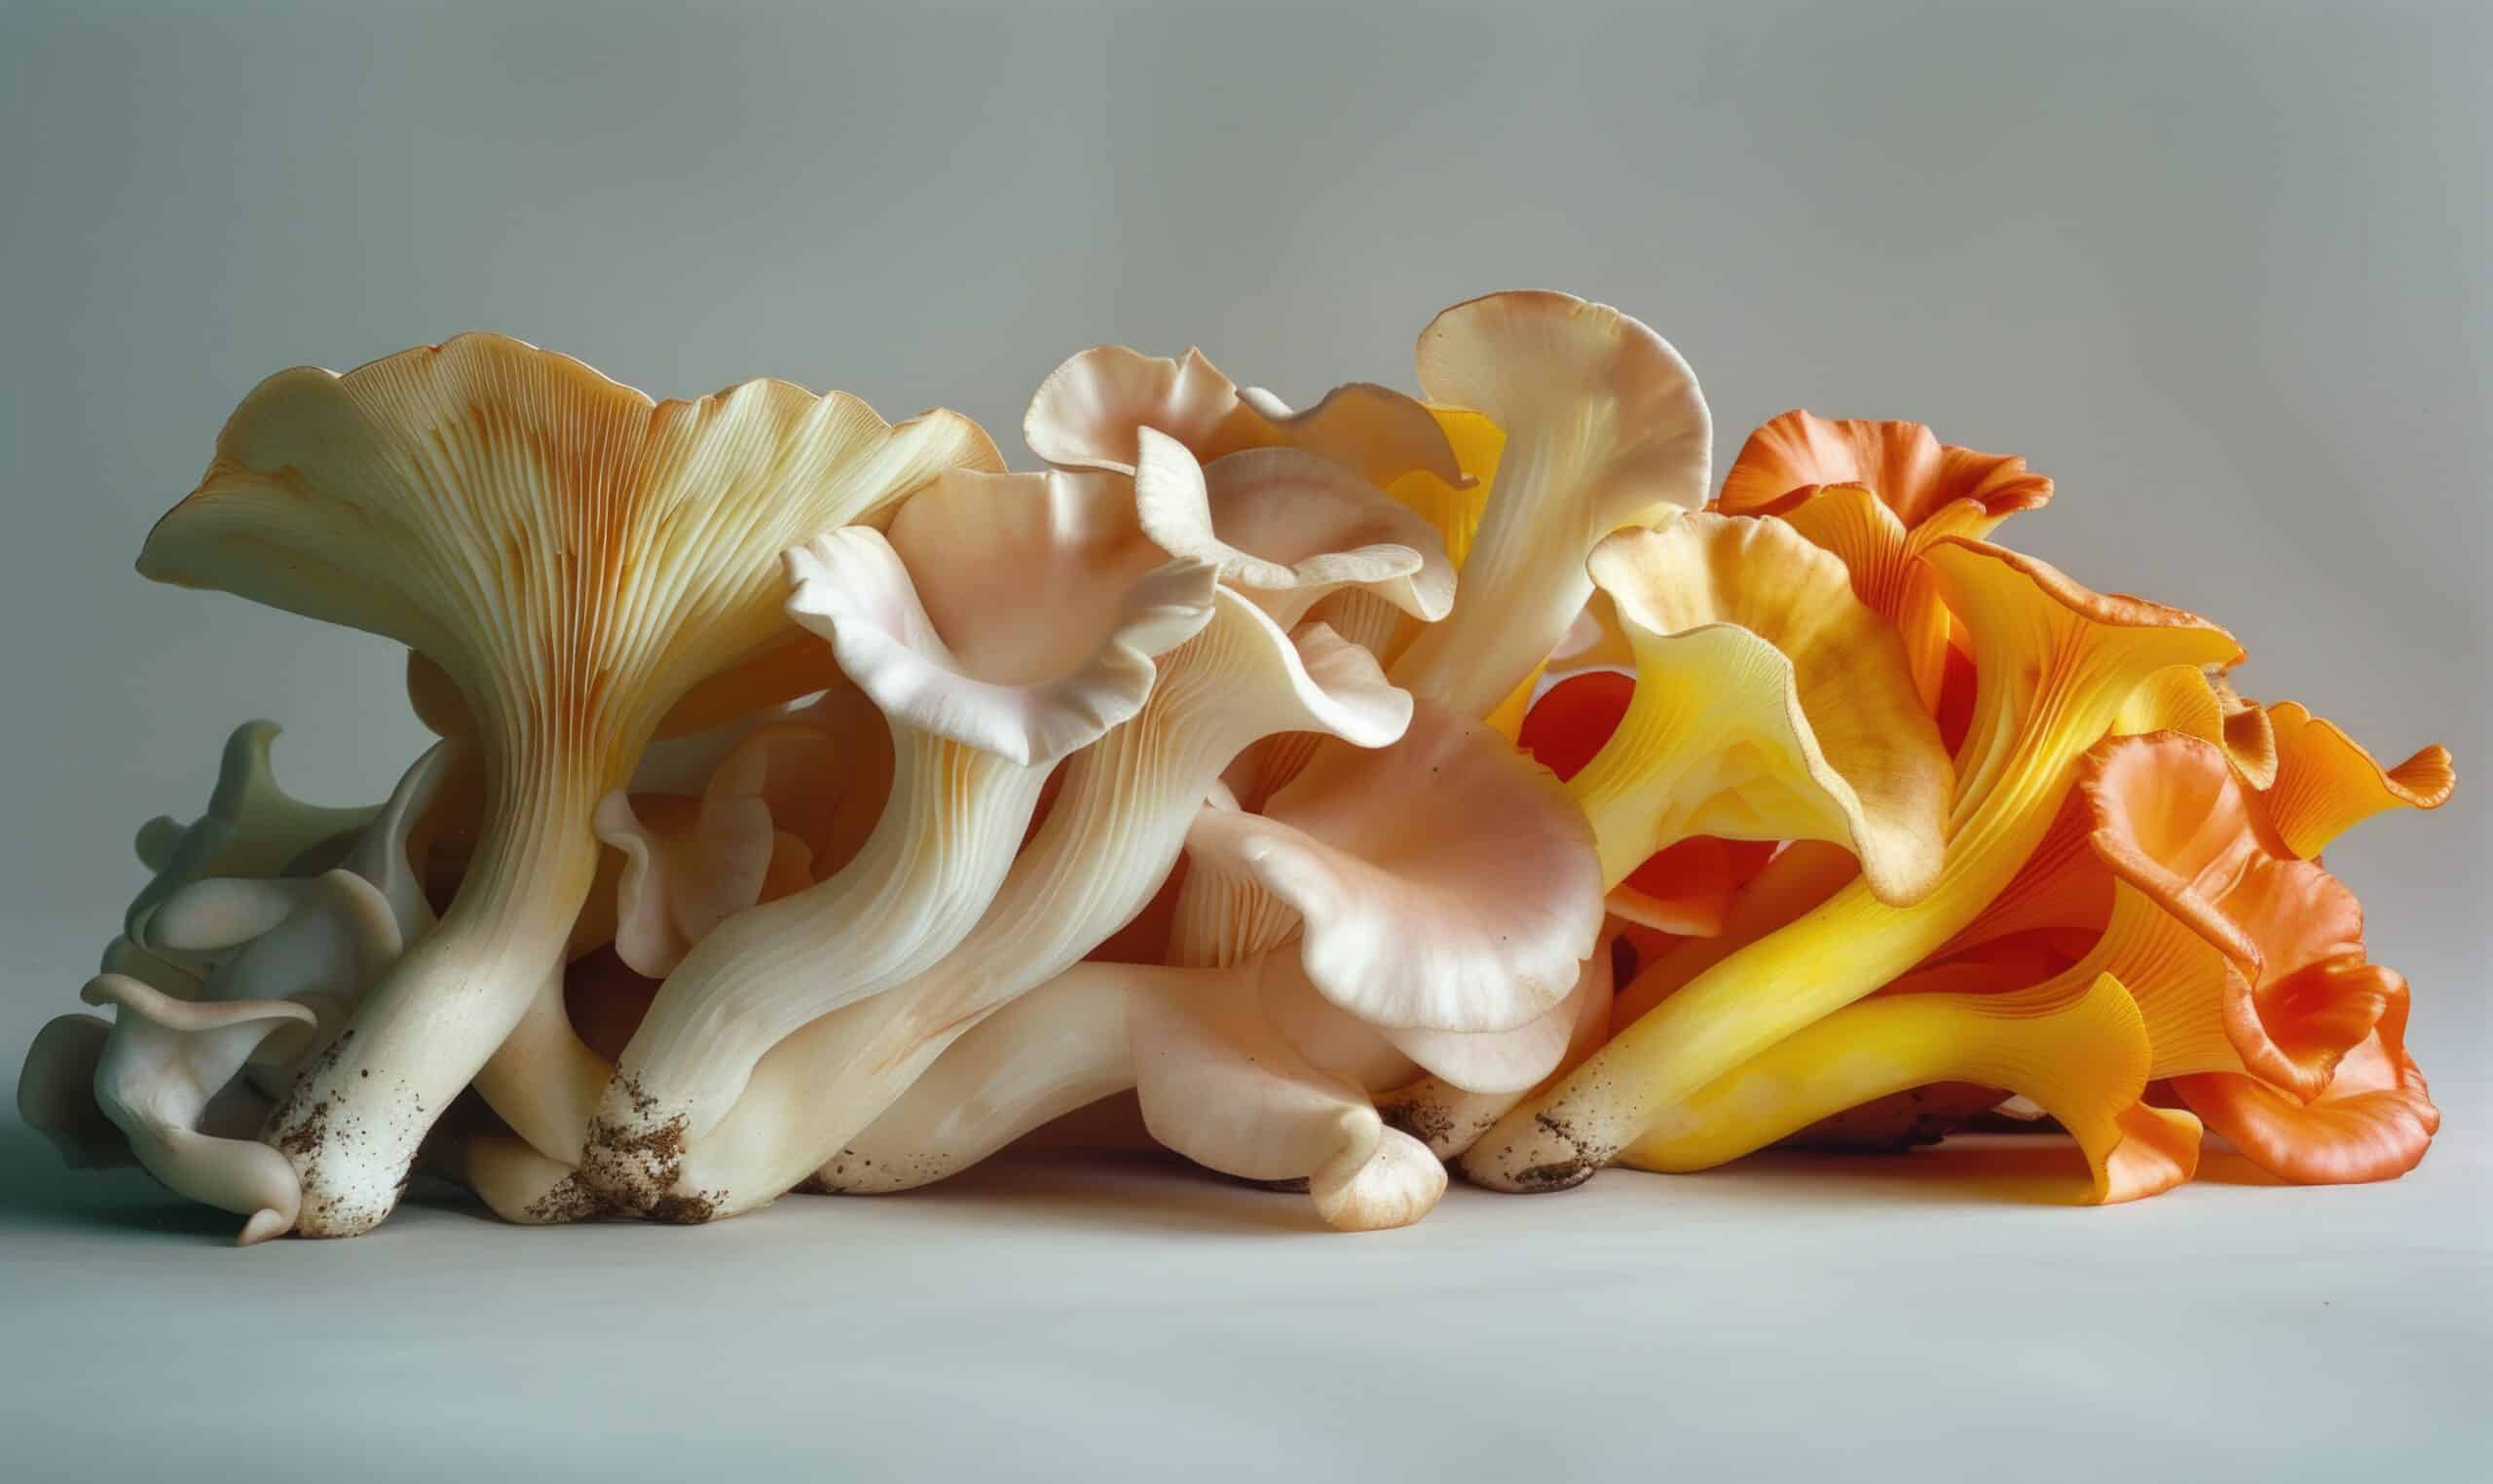 growmyownhealthfood.com : Can I cultivate chanterelle mushrooms at home?